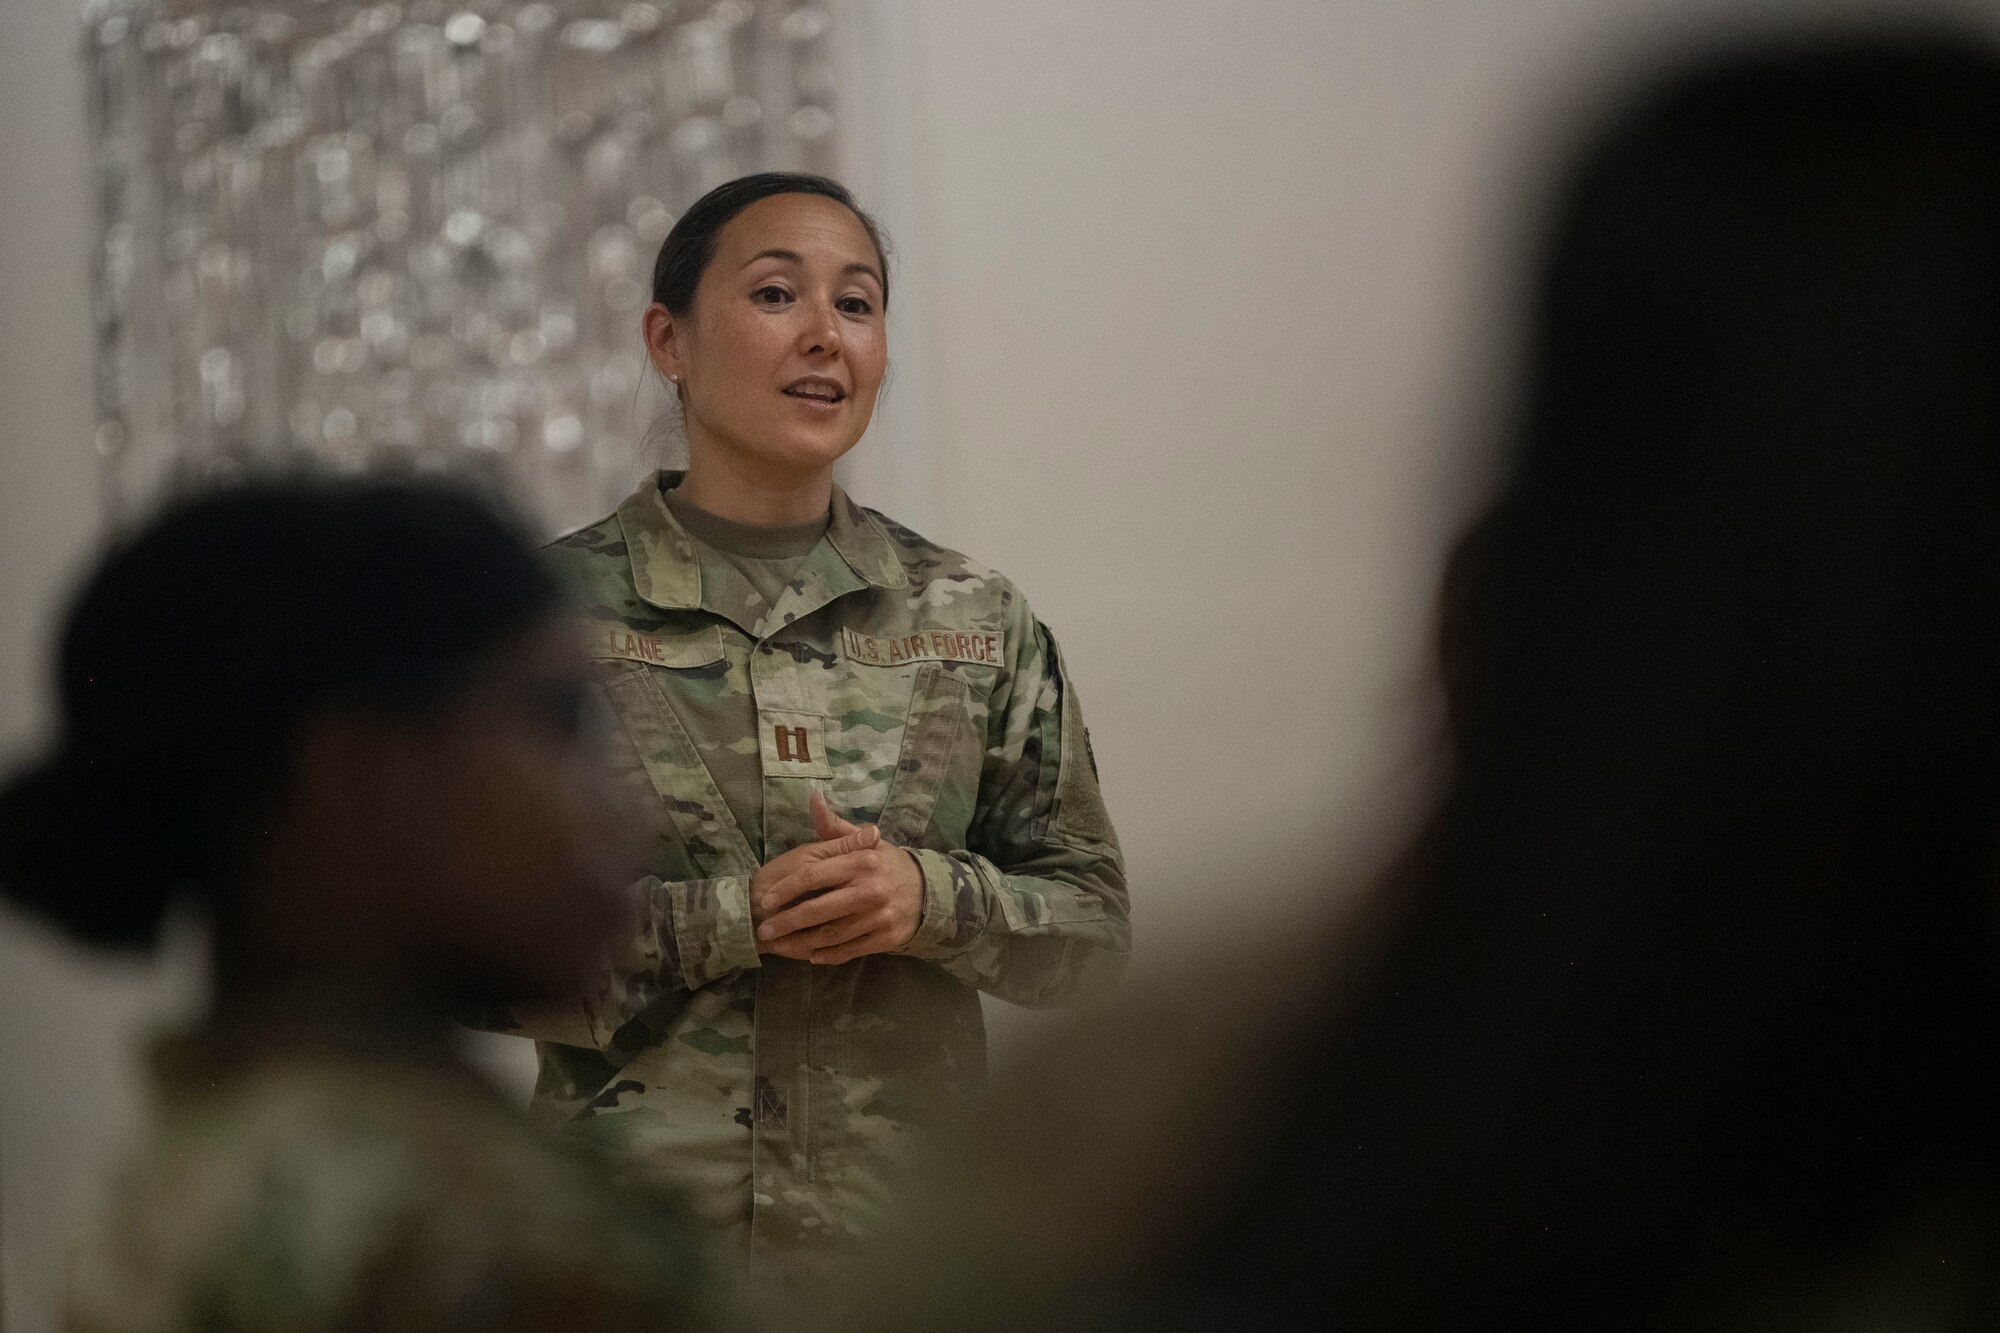 Holloman hosts women in uniform event